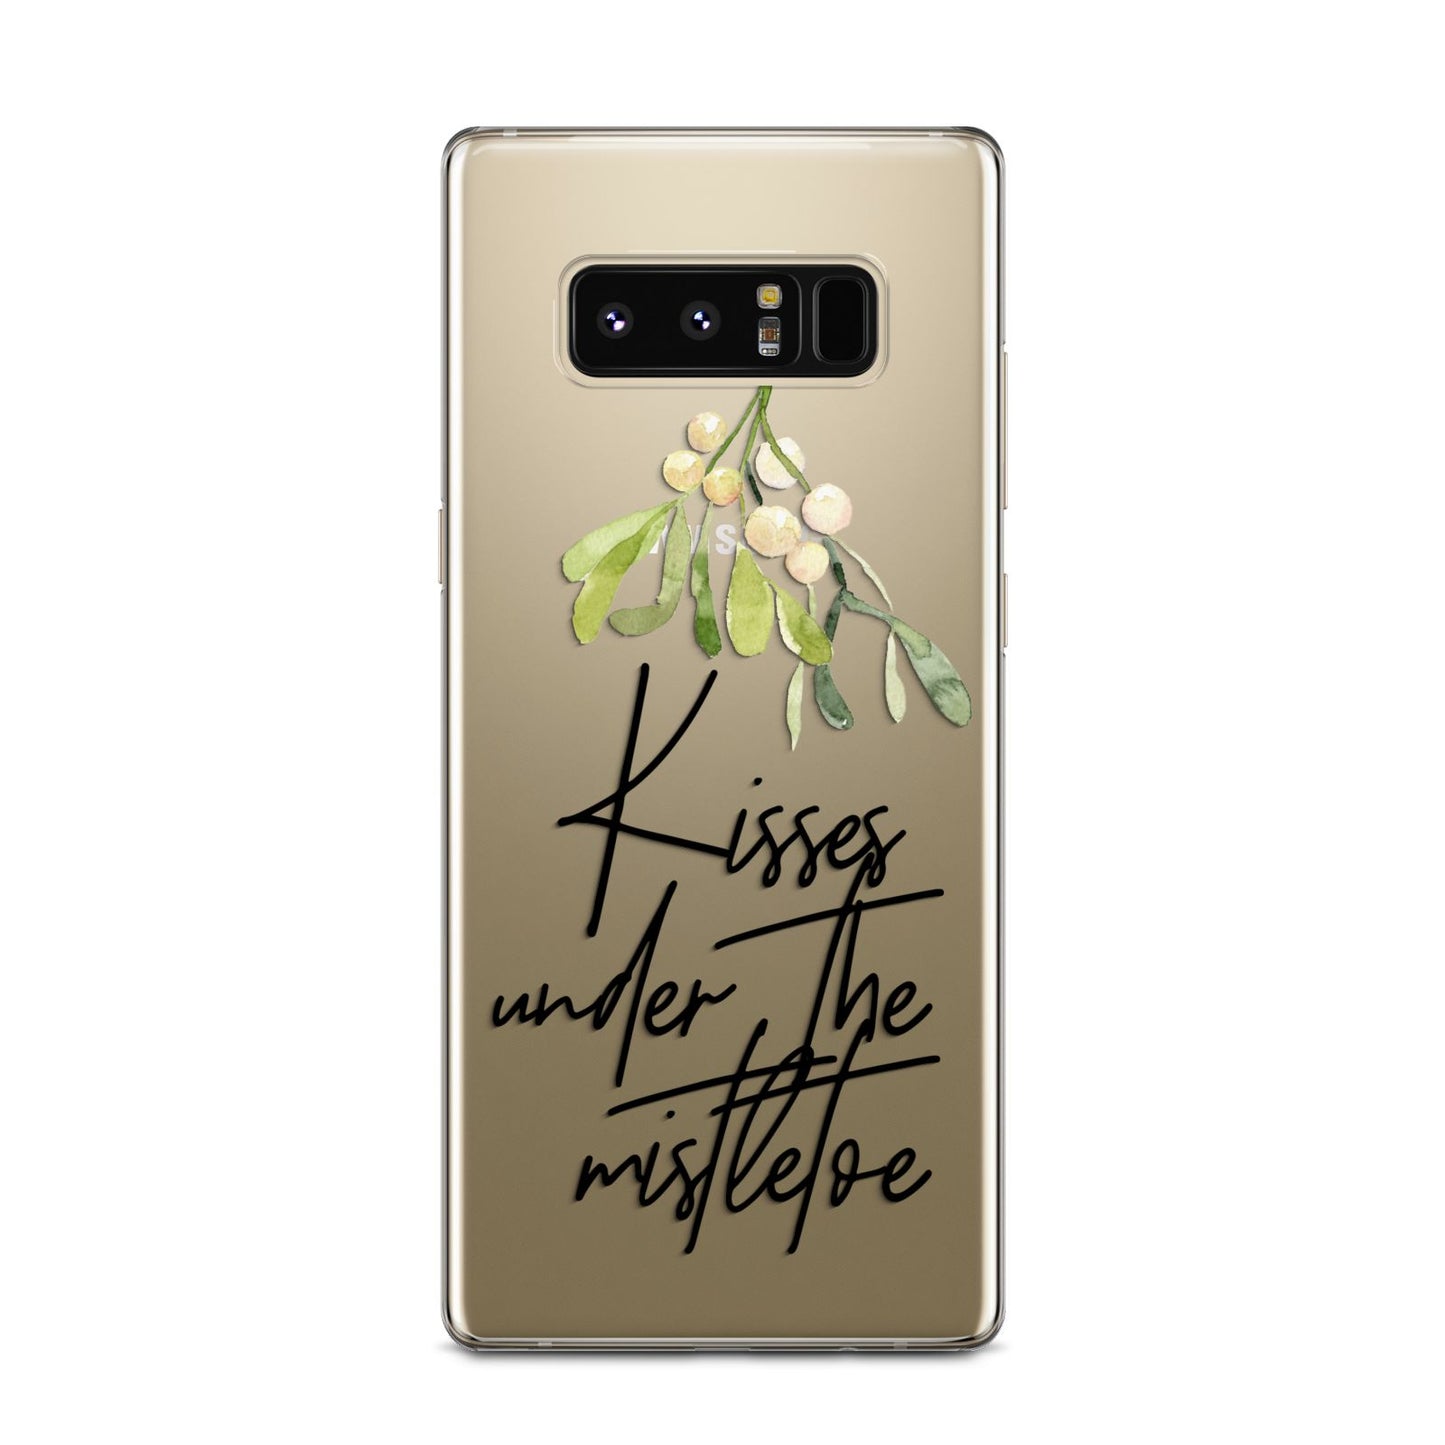 Kisses Under The Mistletoe Samsung Galaxy Note 8 Case